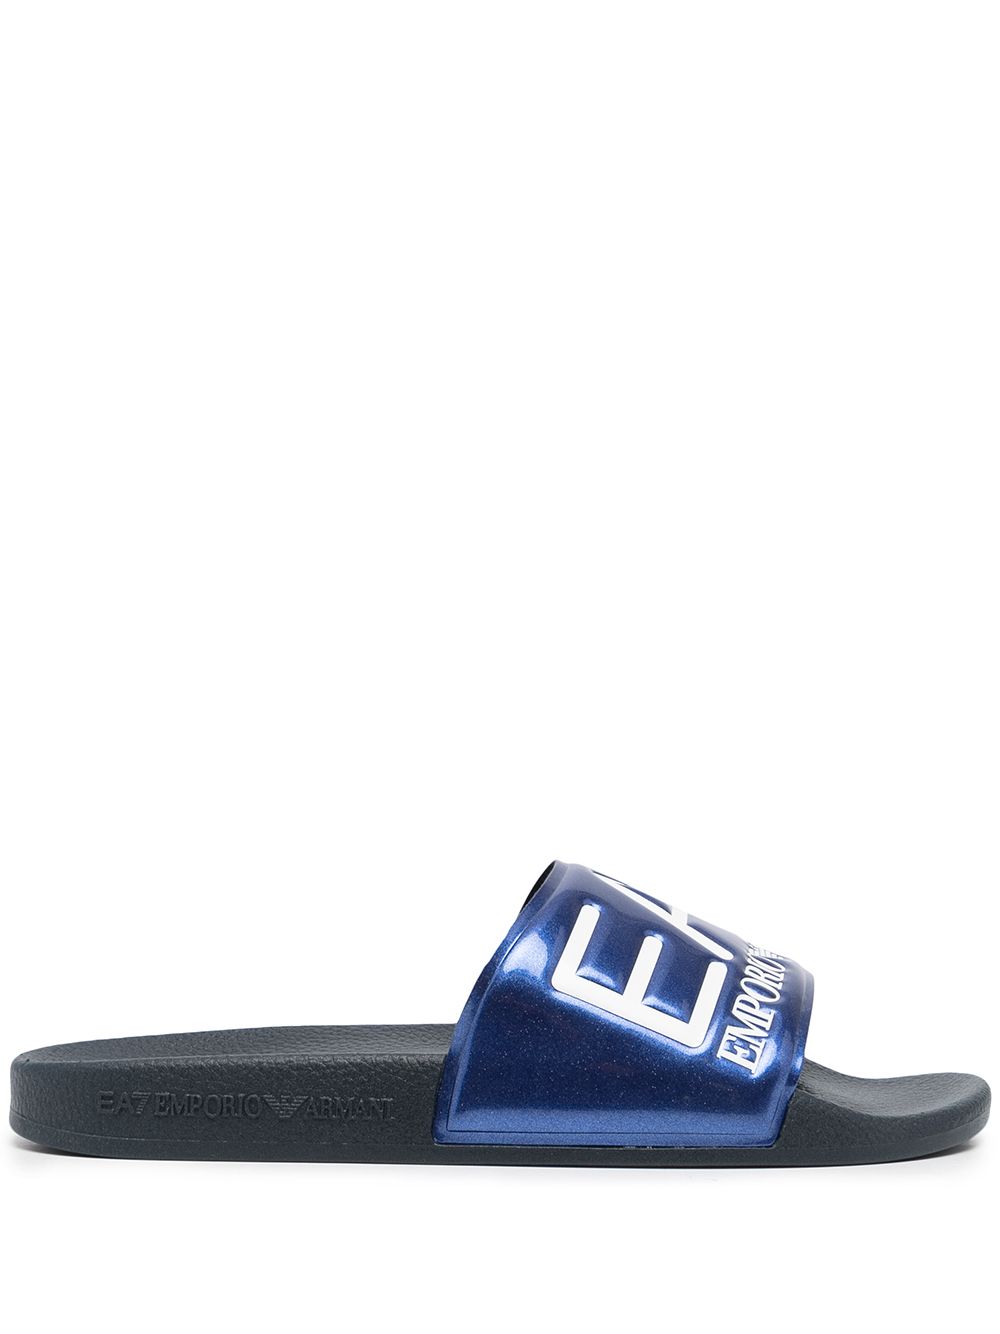 фото Ea7 emporio armani сандалии с тисненым логотипом